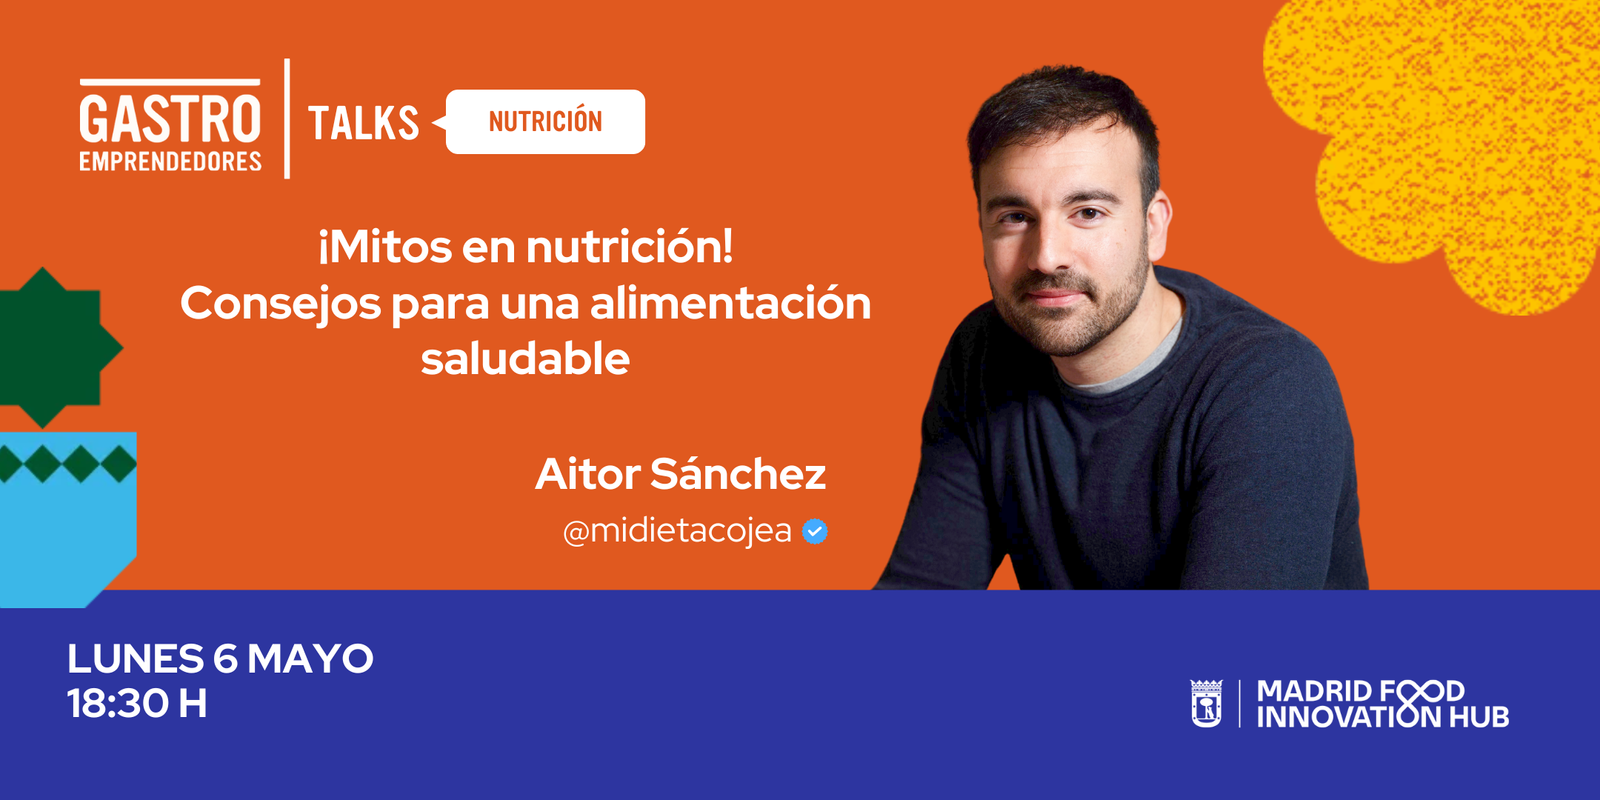 Vuelve Gastroemprendedores Talks Aitor Sánchez